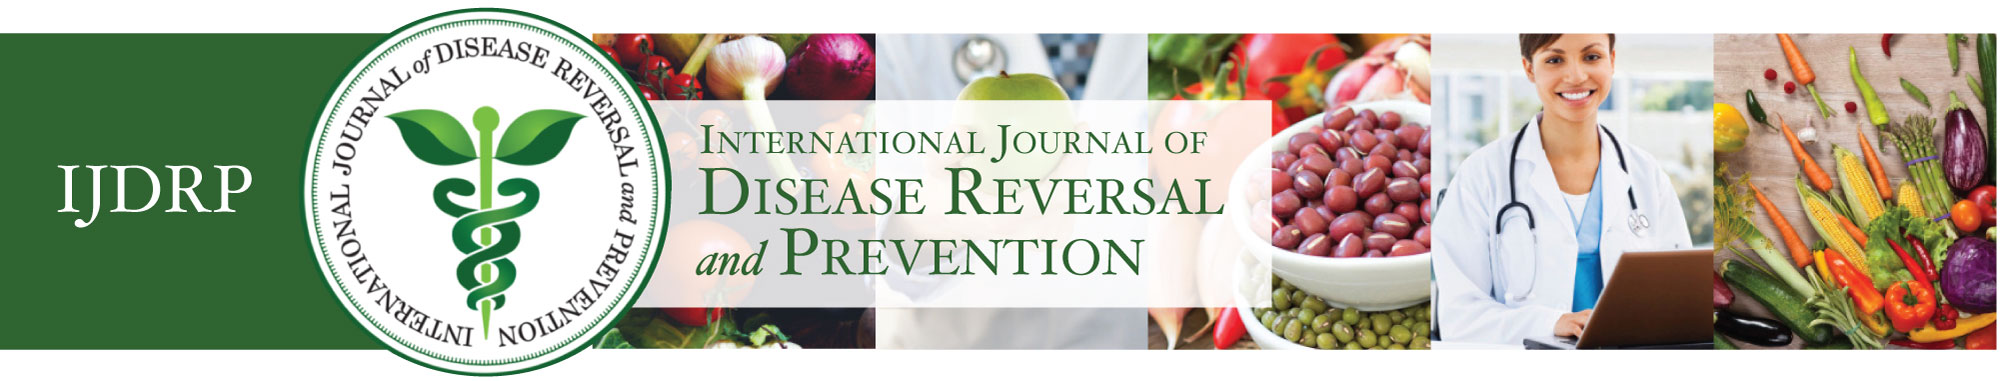 International Journal of Disease Reversal and Prevention